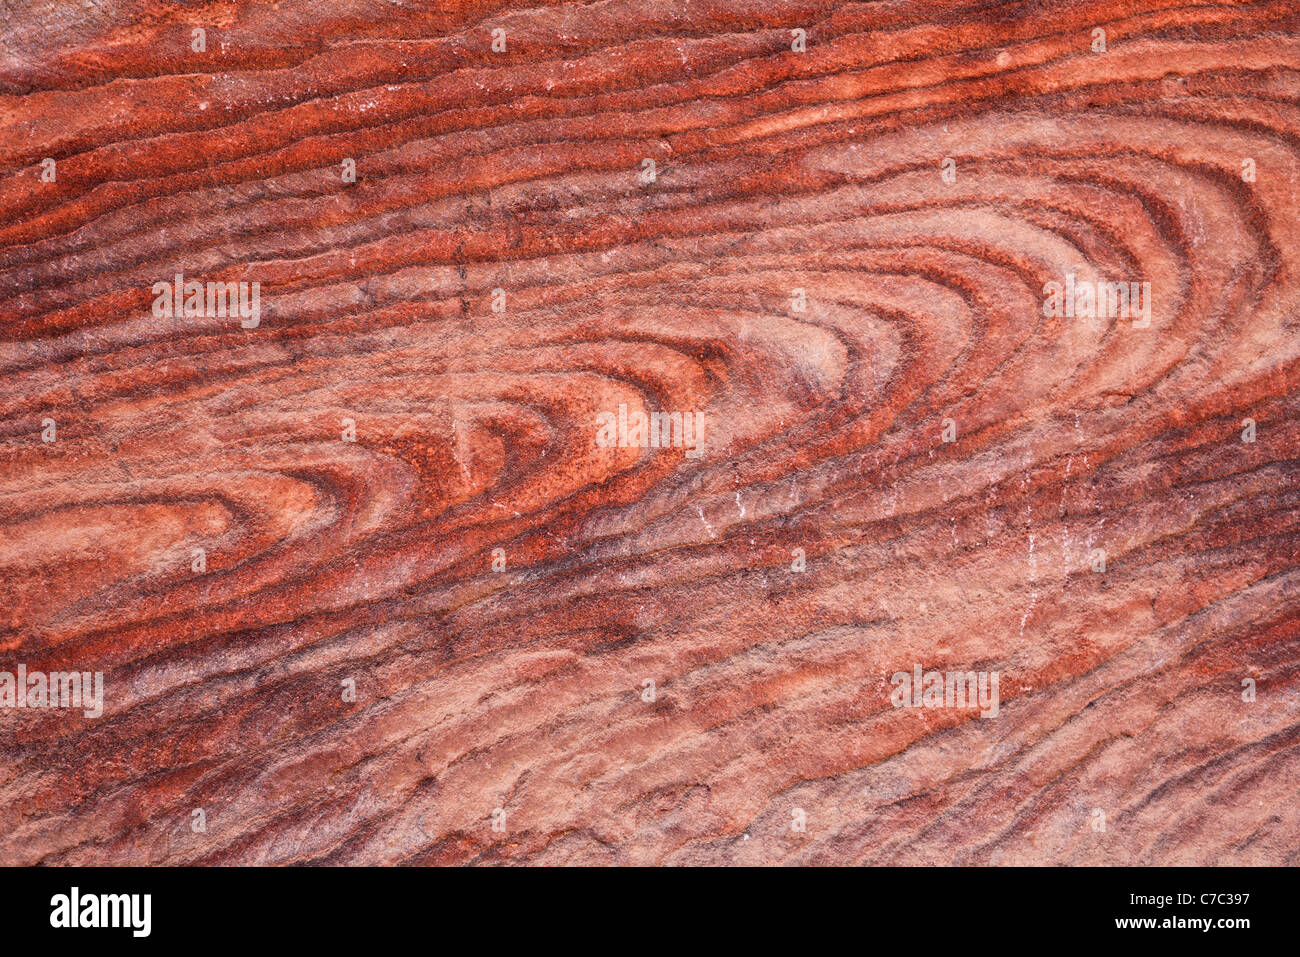 Natural patterns in the rock at Petra, Jordan Stock Photo